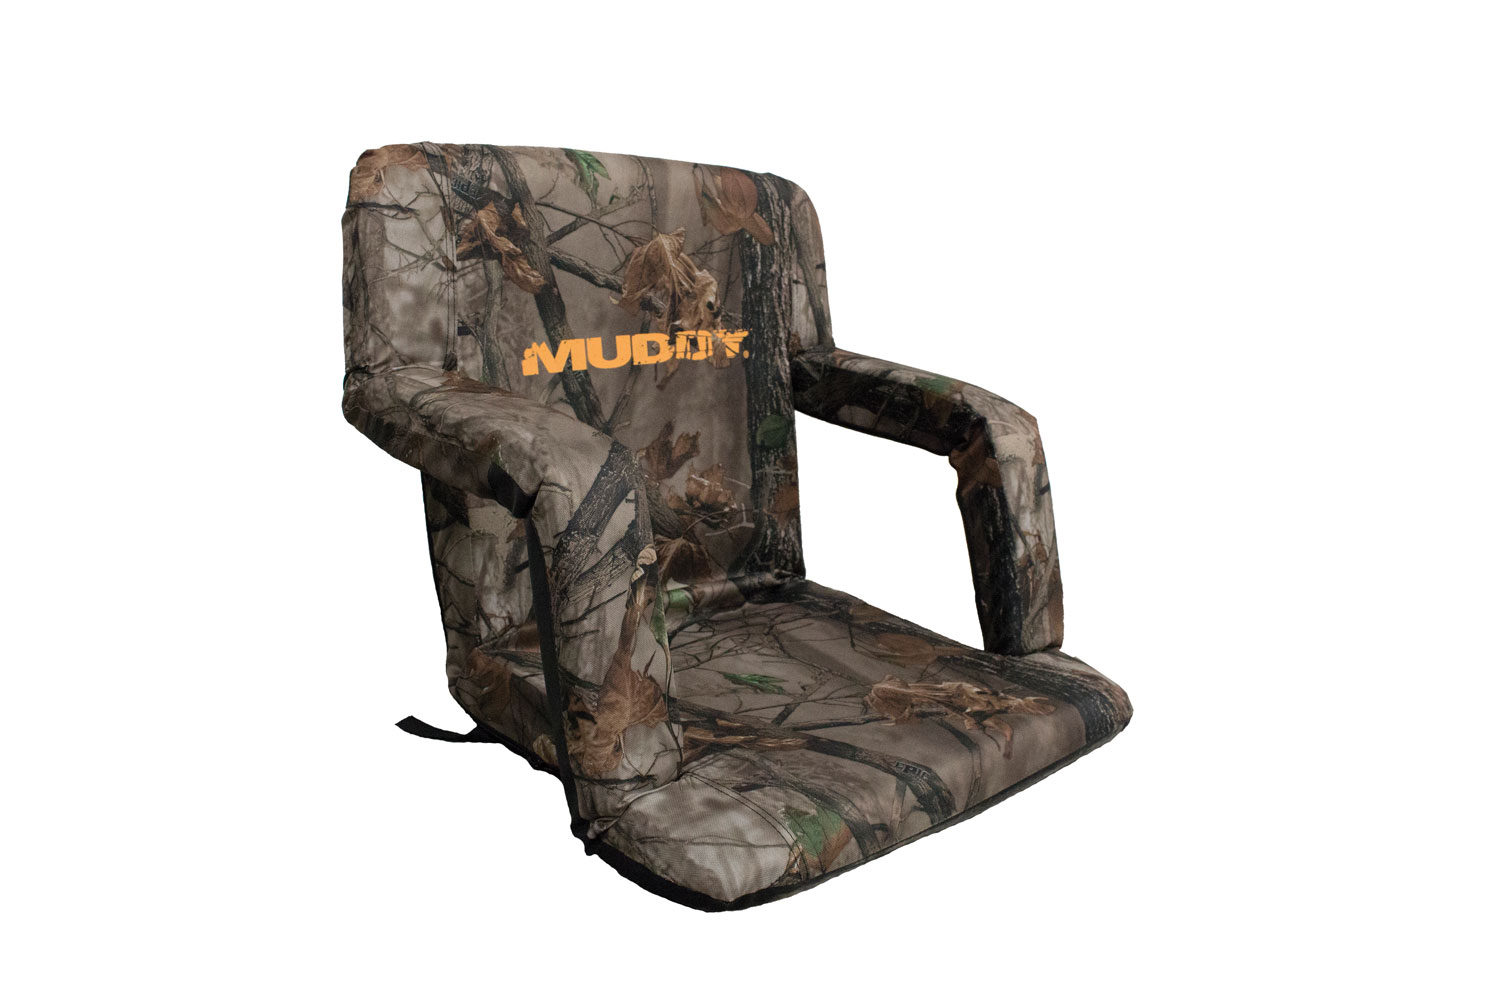 Muddy MUDGS1206 Deluxe Stadium Chair Bucket Chair Camo